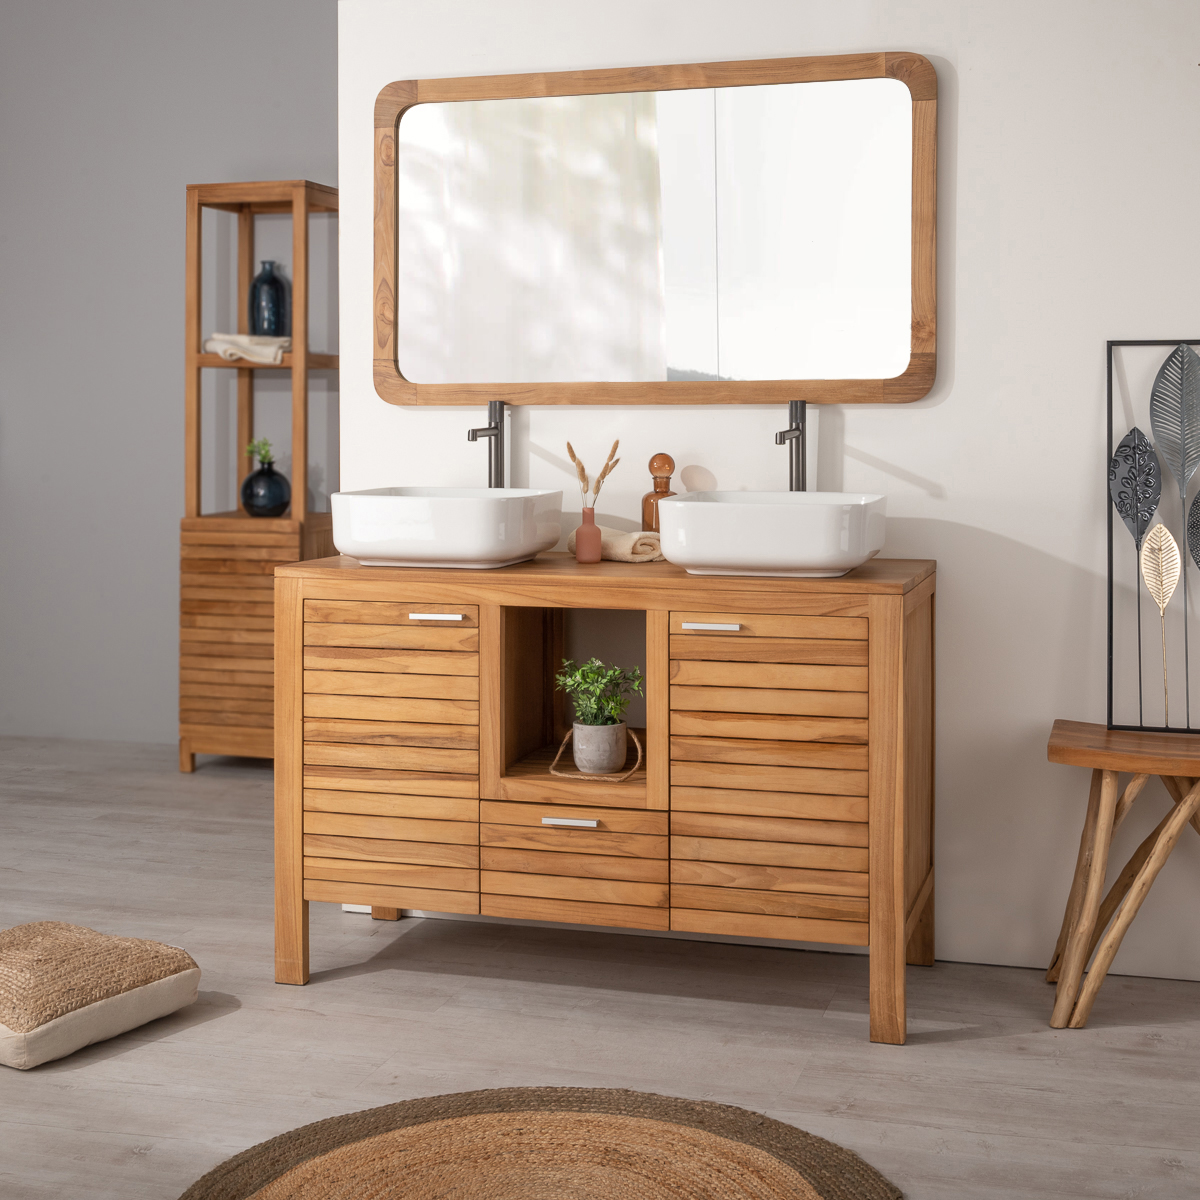 Wanda Collection mobilier vasque bois massif style chalet moderne